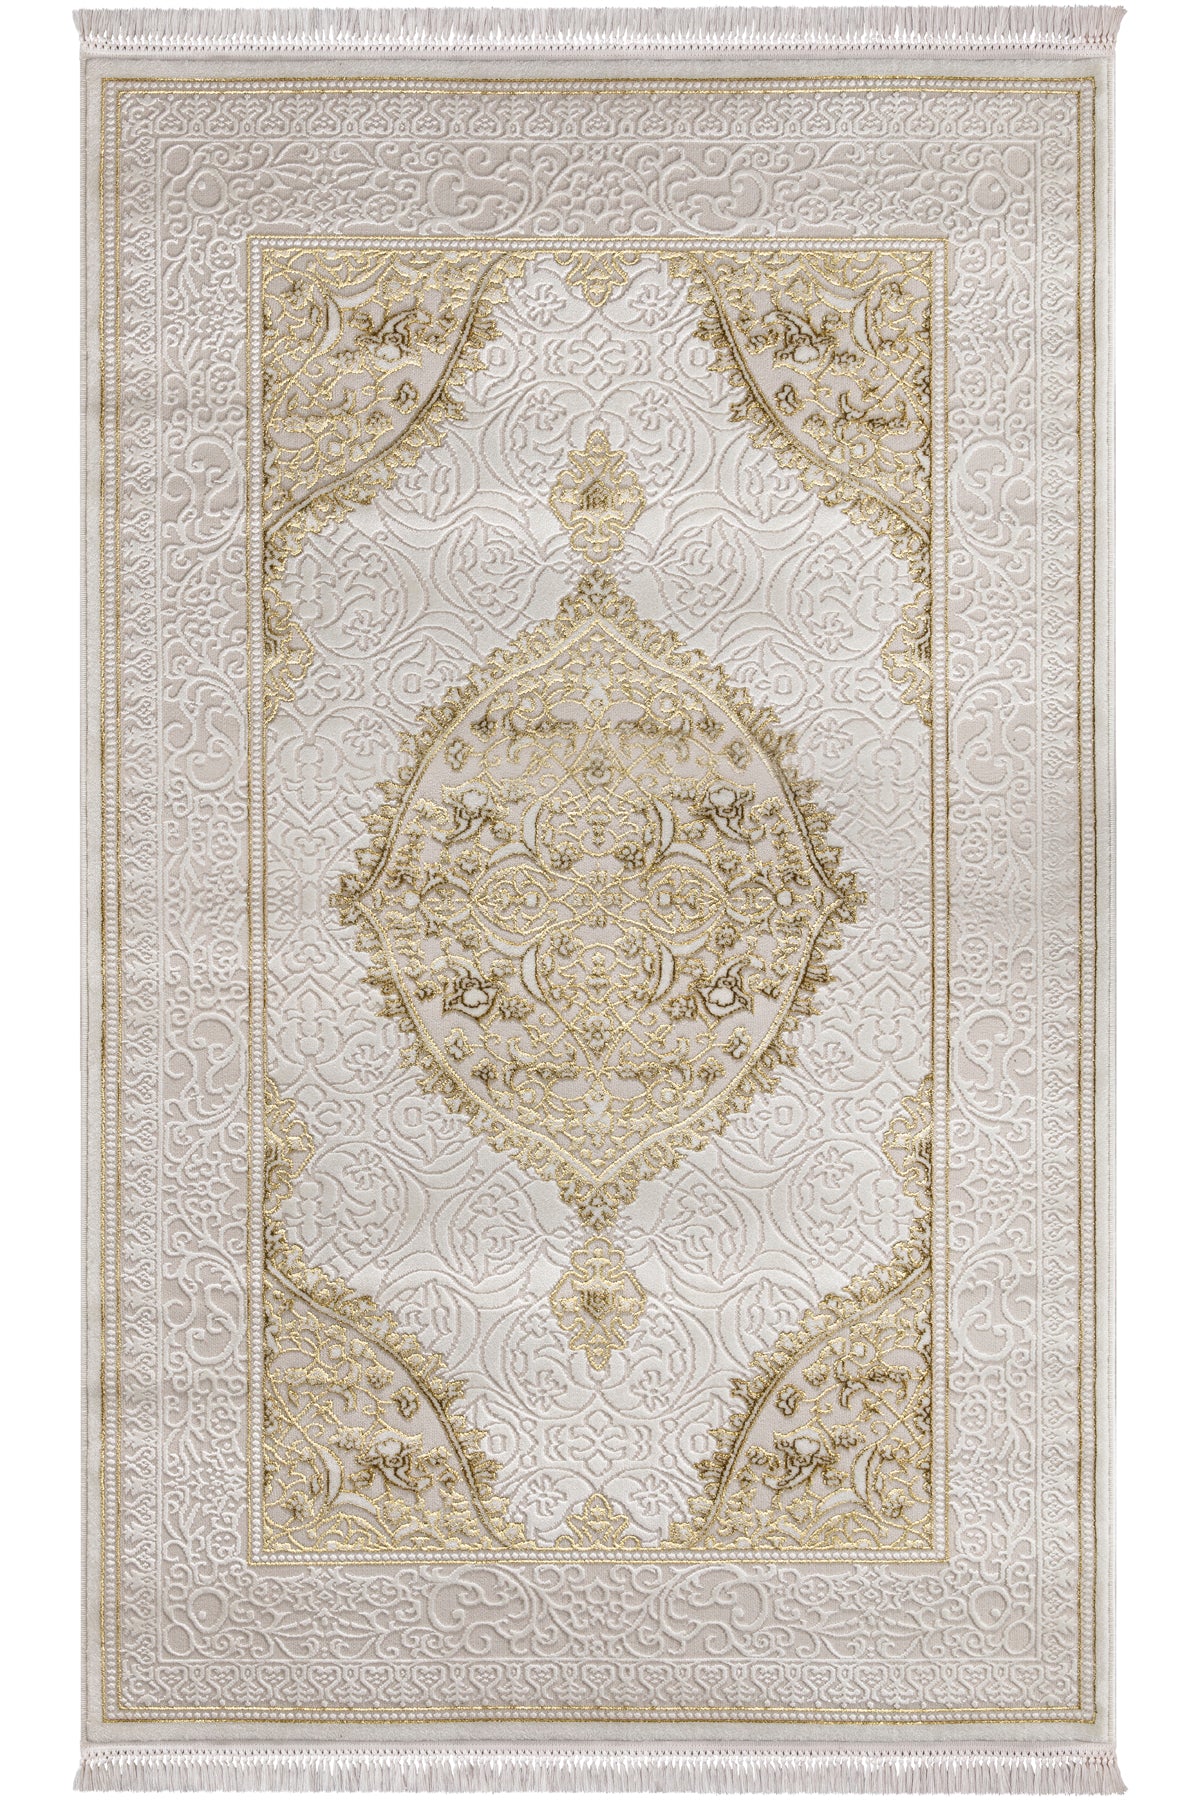 Decoroplus, Decoro+, high quality turkish area rug for dining or living room, soft rug, modern rug, dining rug, living room rug